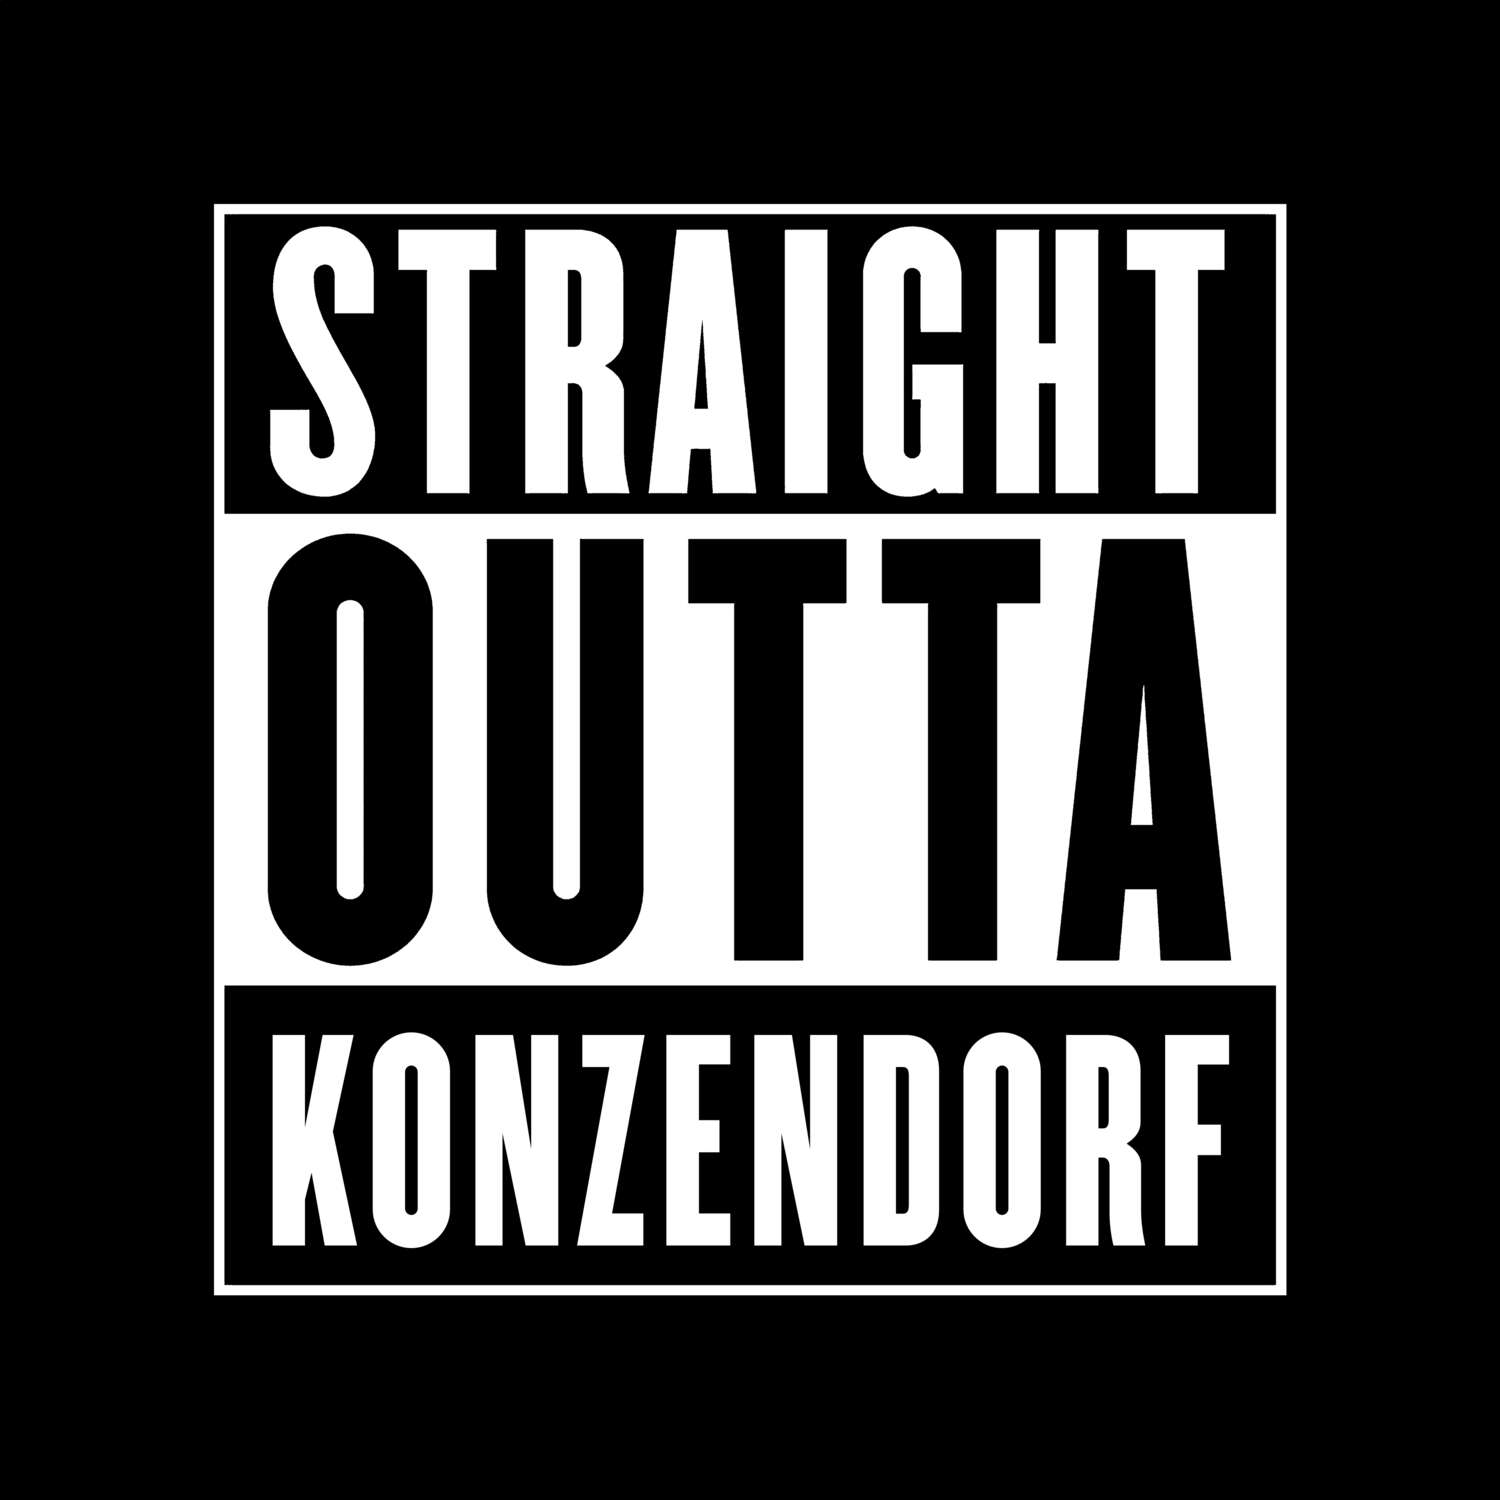 Konzendorf T-Shirt »Straight Outta«